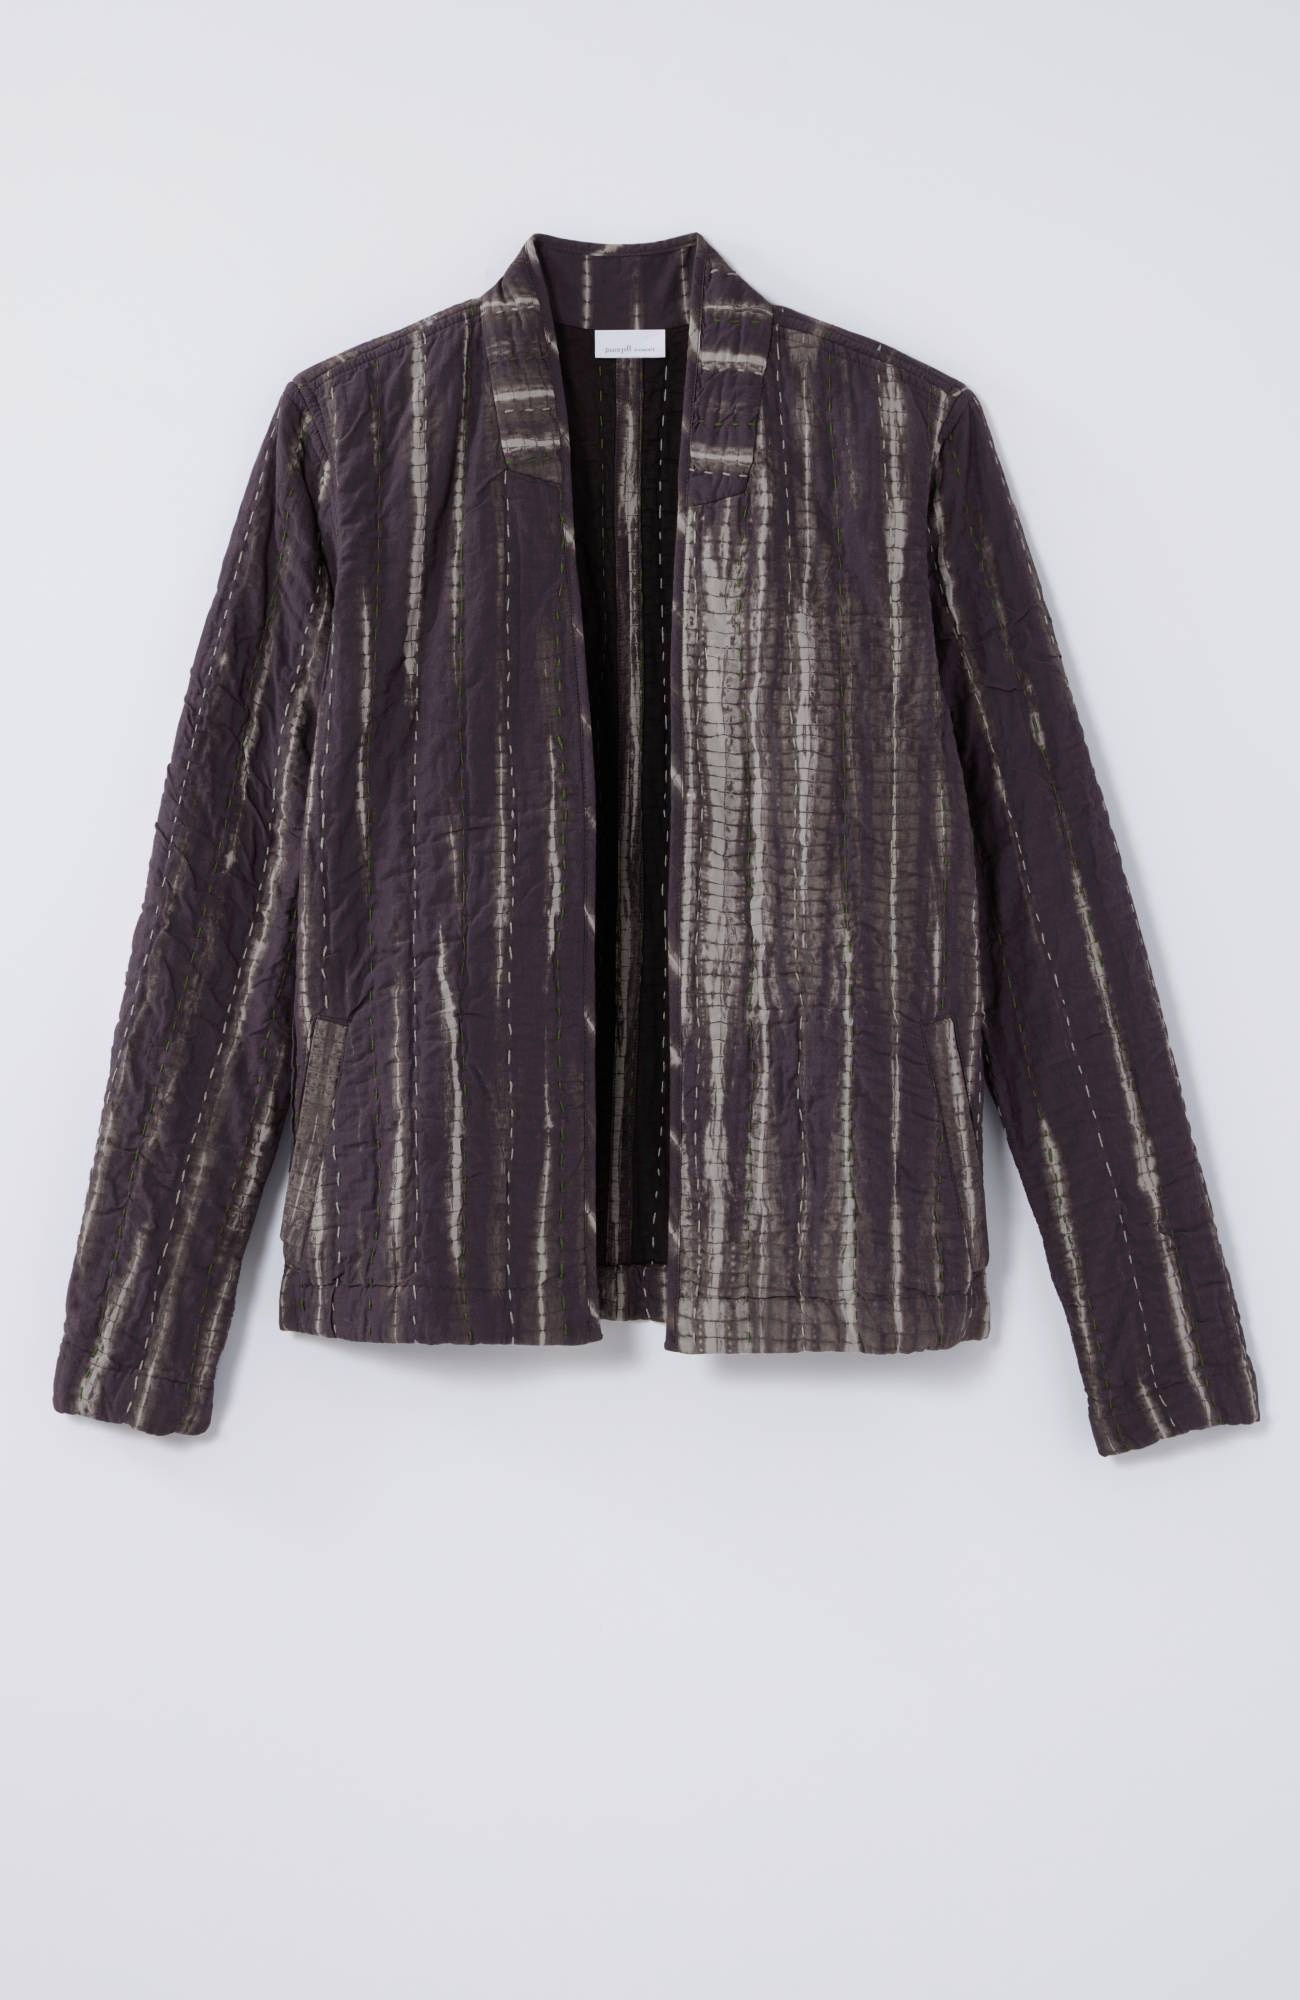 Pure Jill Tie-Dyed Kantha-Stitched Jacket